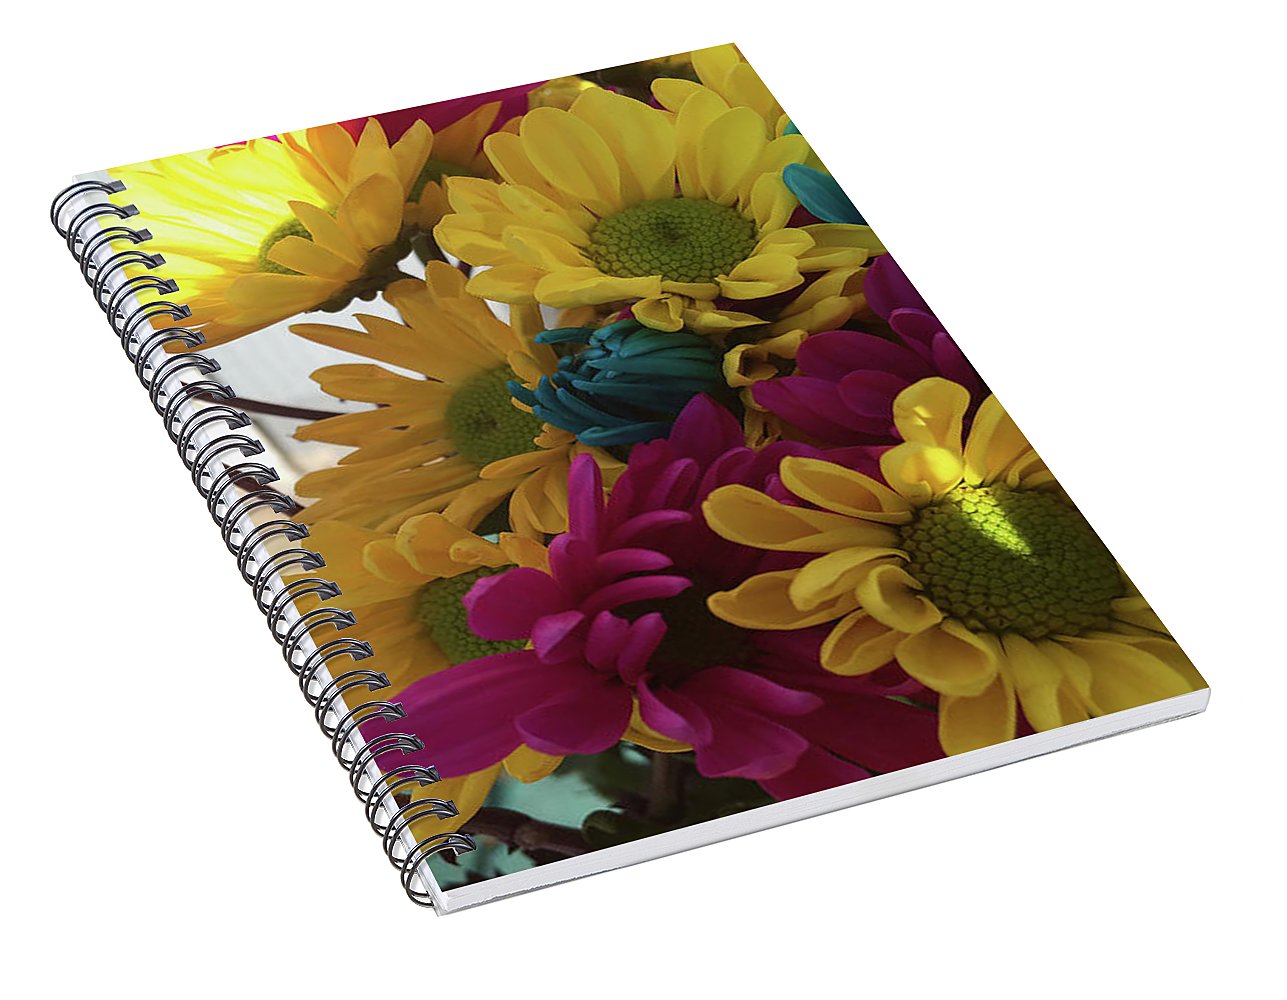 Raw Flowers 2 - Spiral Notebook